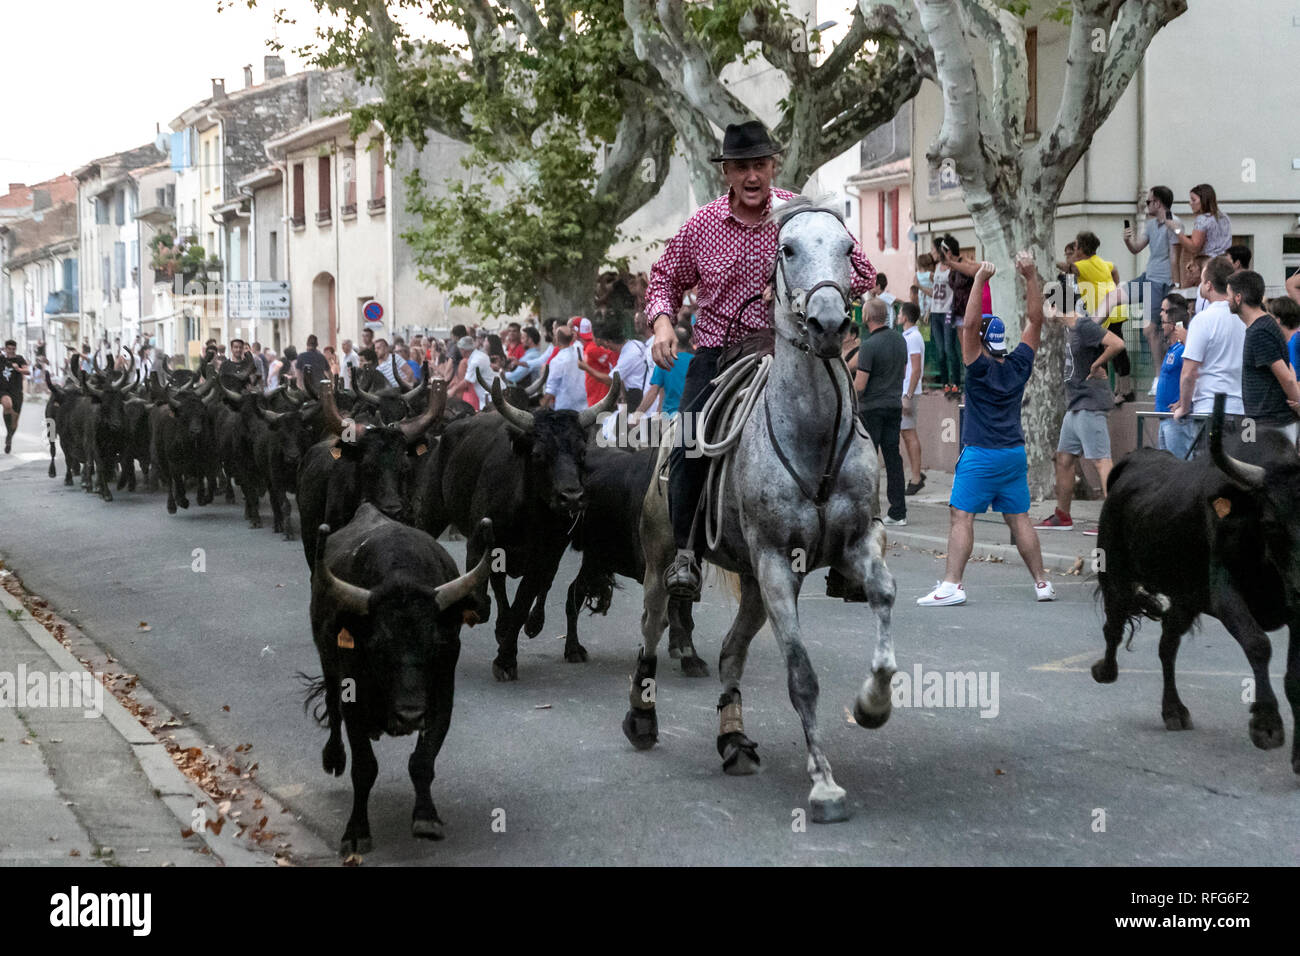 Gardian and bulls in annual bull running fete, Saint Gilles, Gard, France Stock Photo